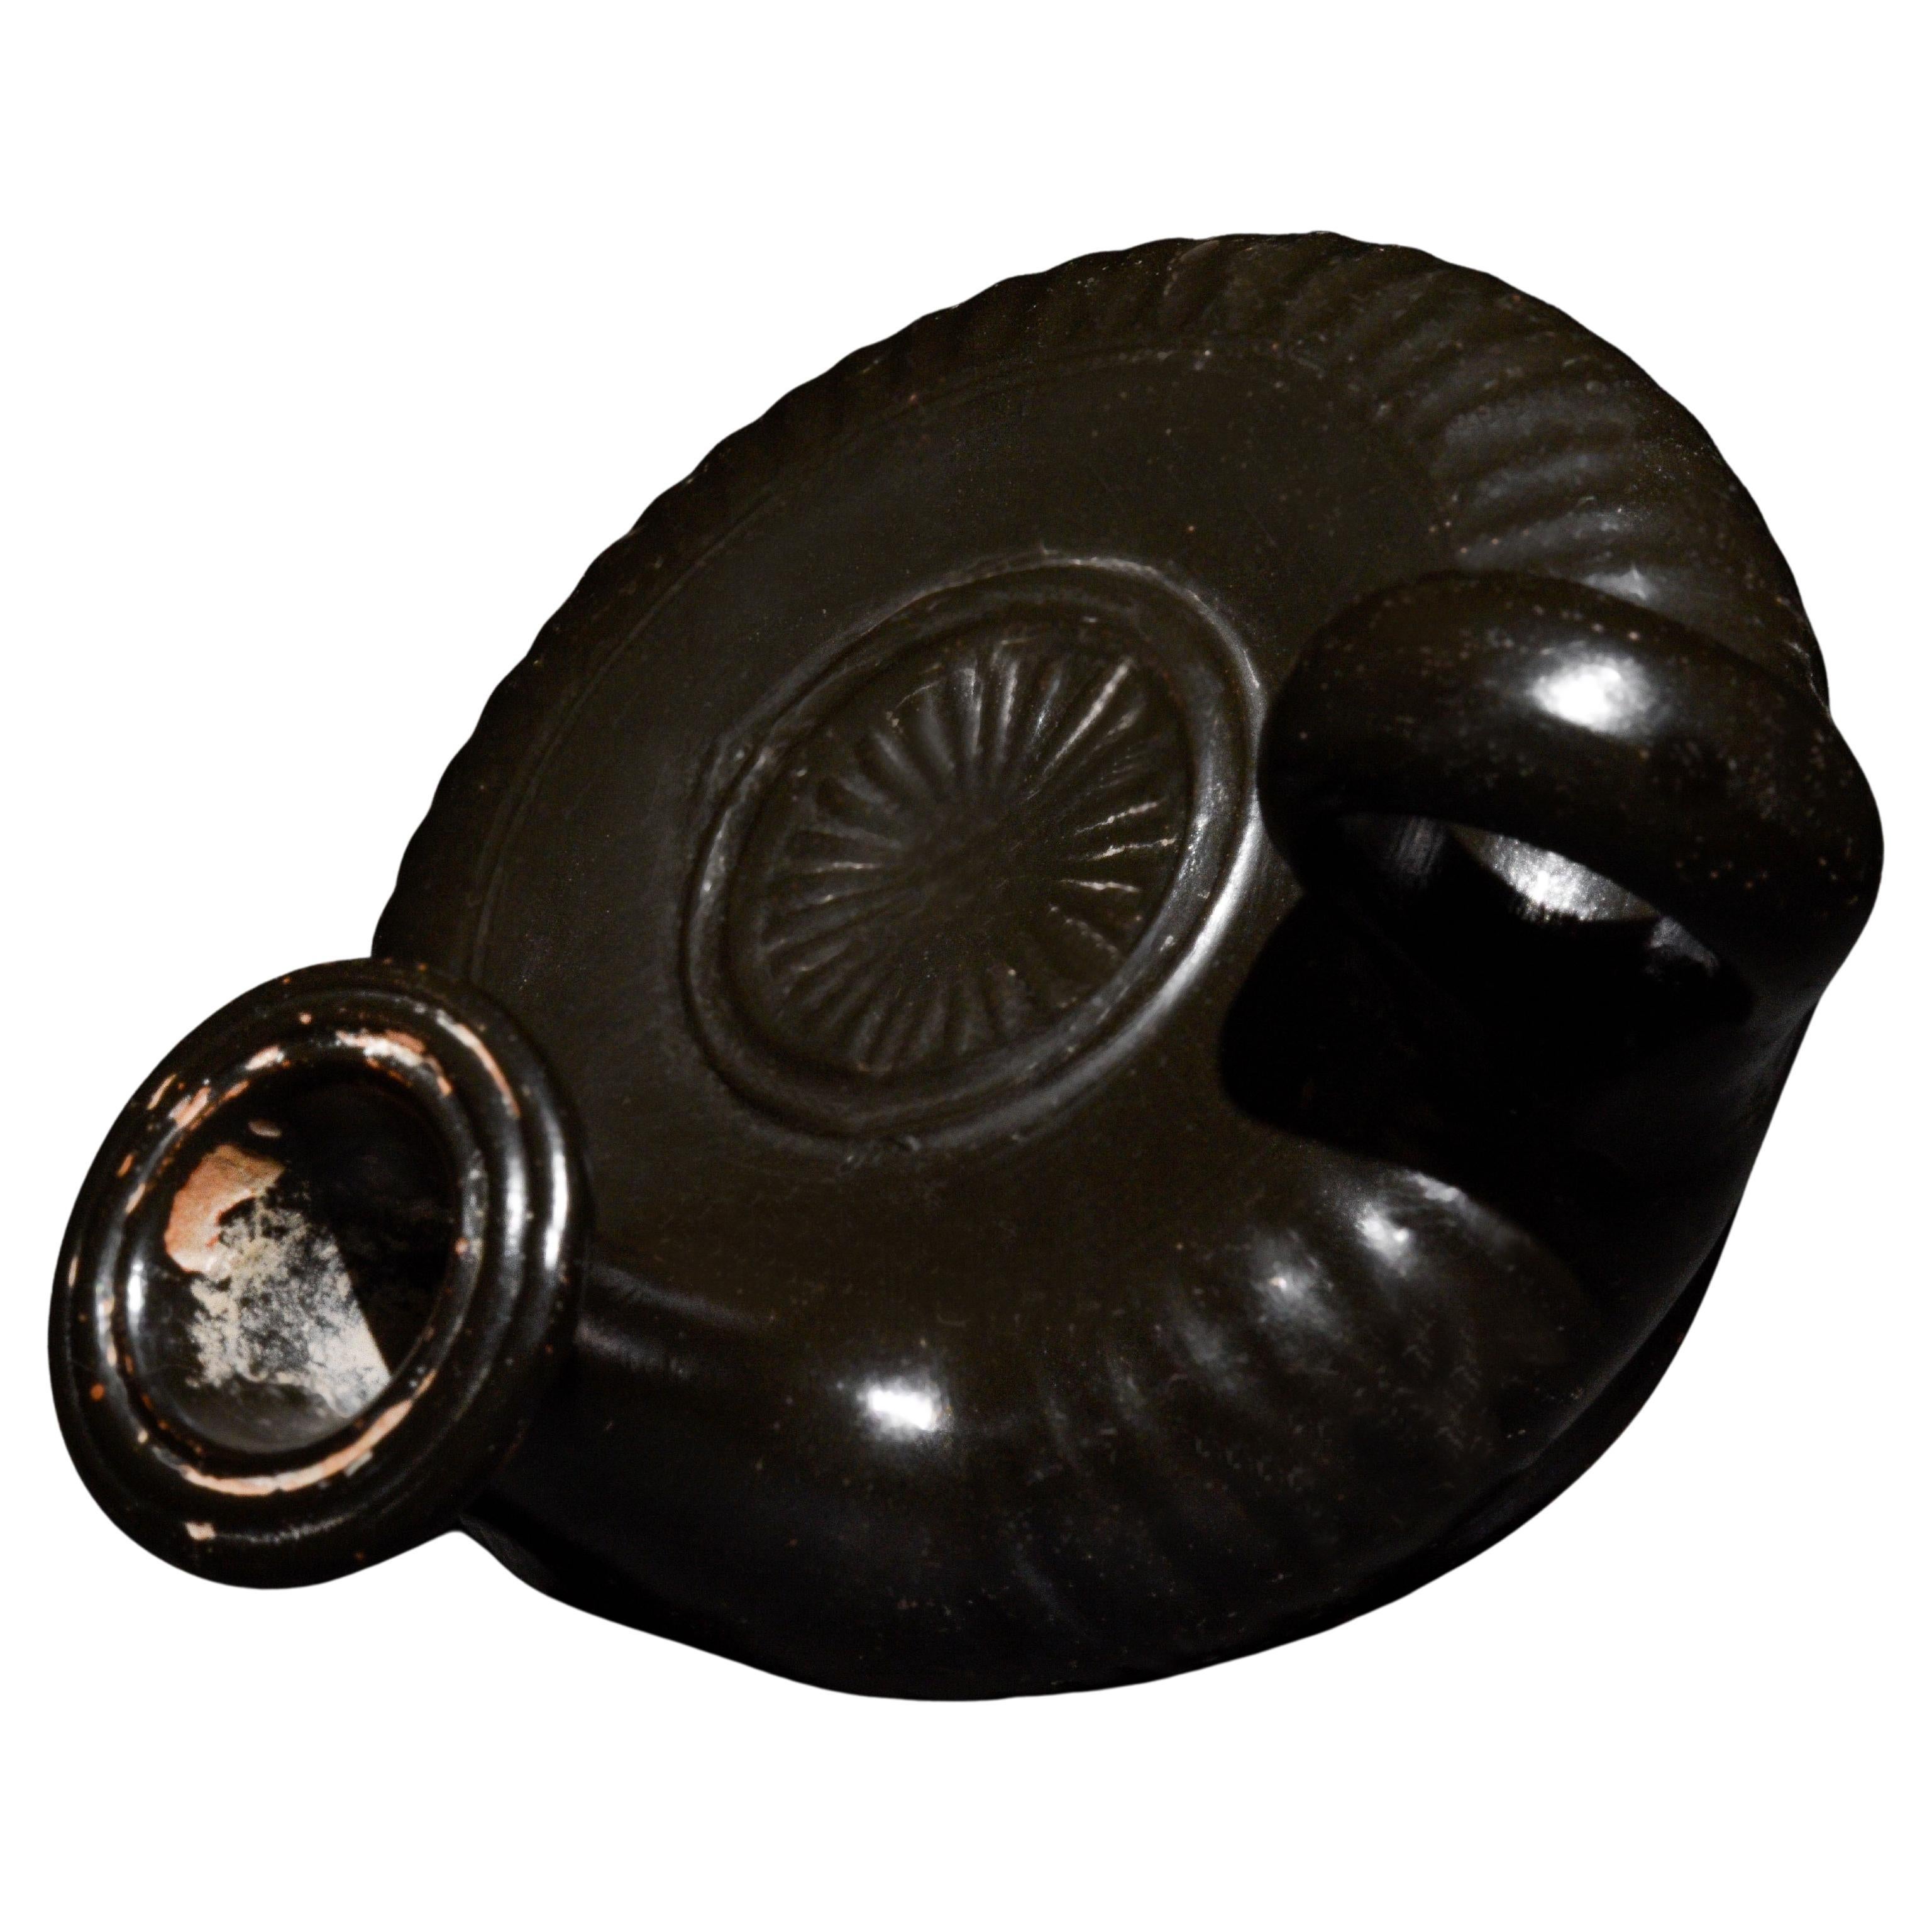 Griechische schwarze Glasur-Keramik Guttus 